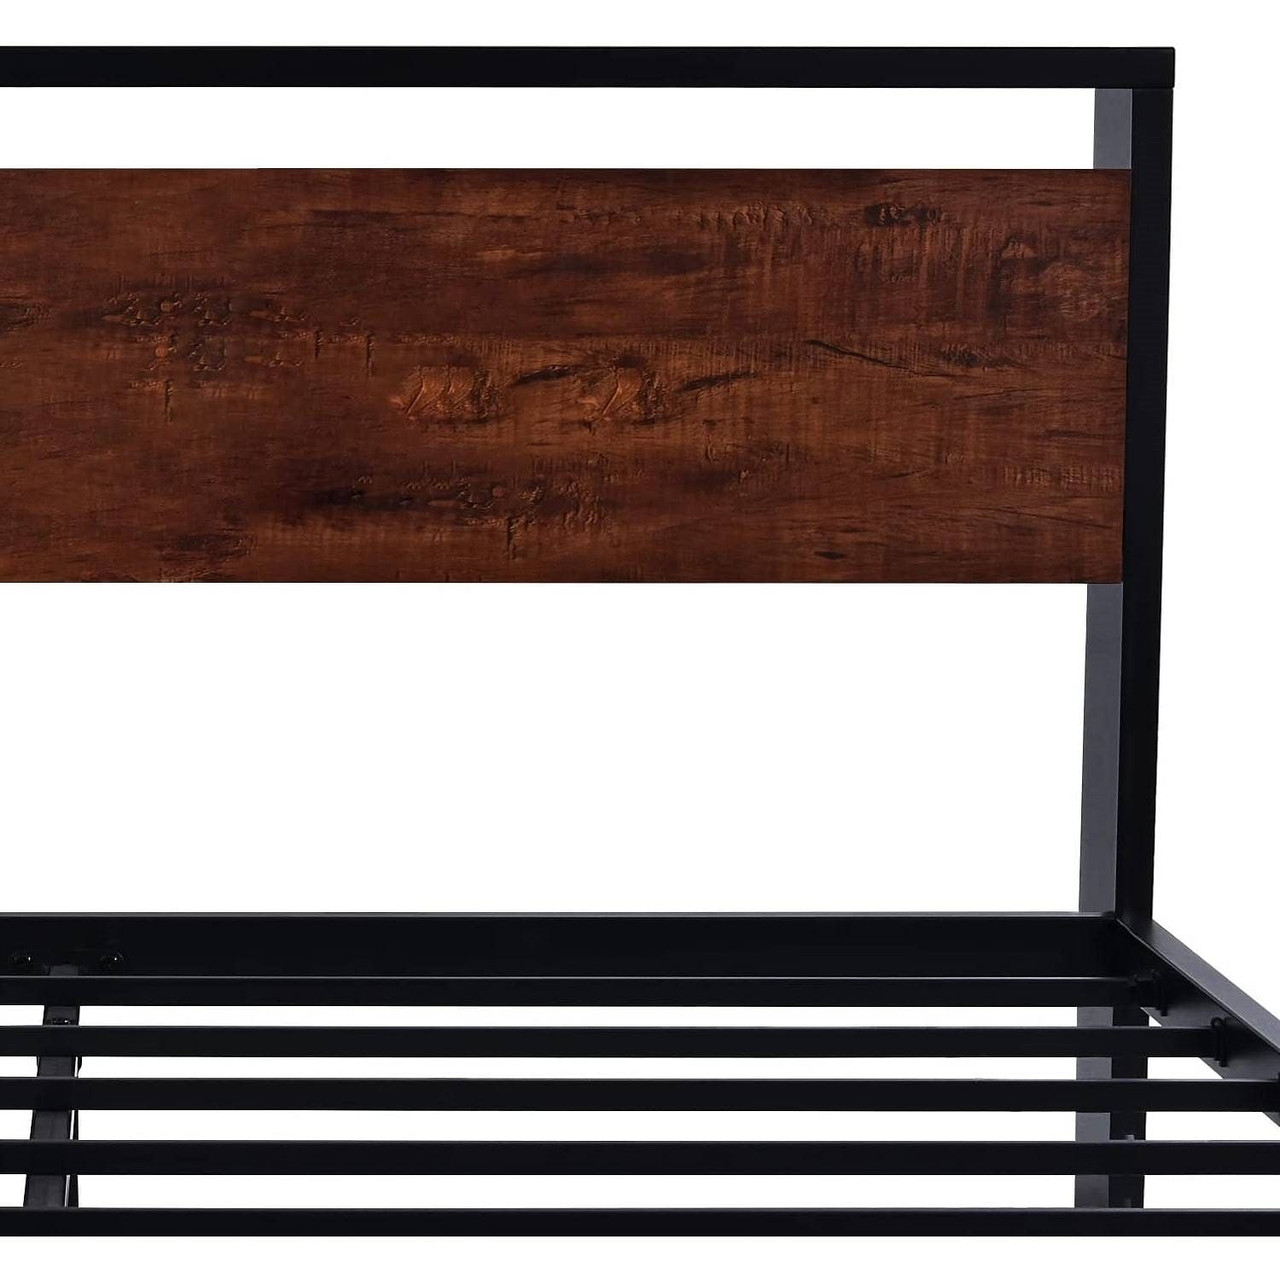 Queen Metal Platform Bed Frame with Mahogany Wood Panel Headboard Footboard